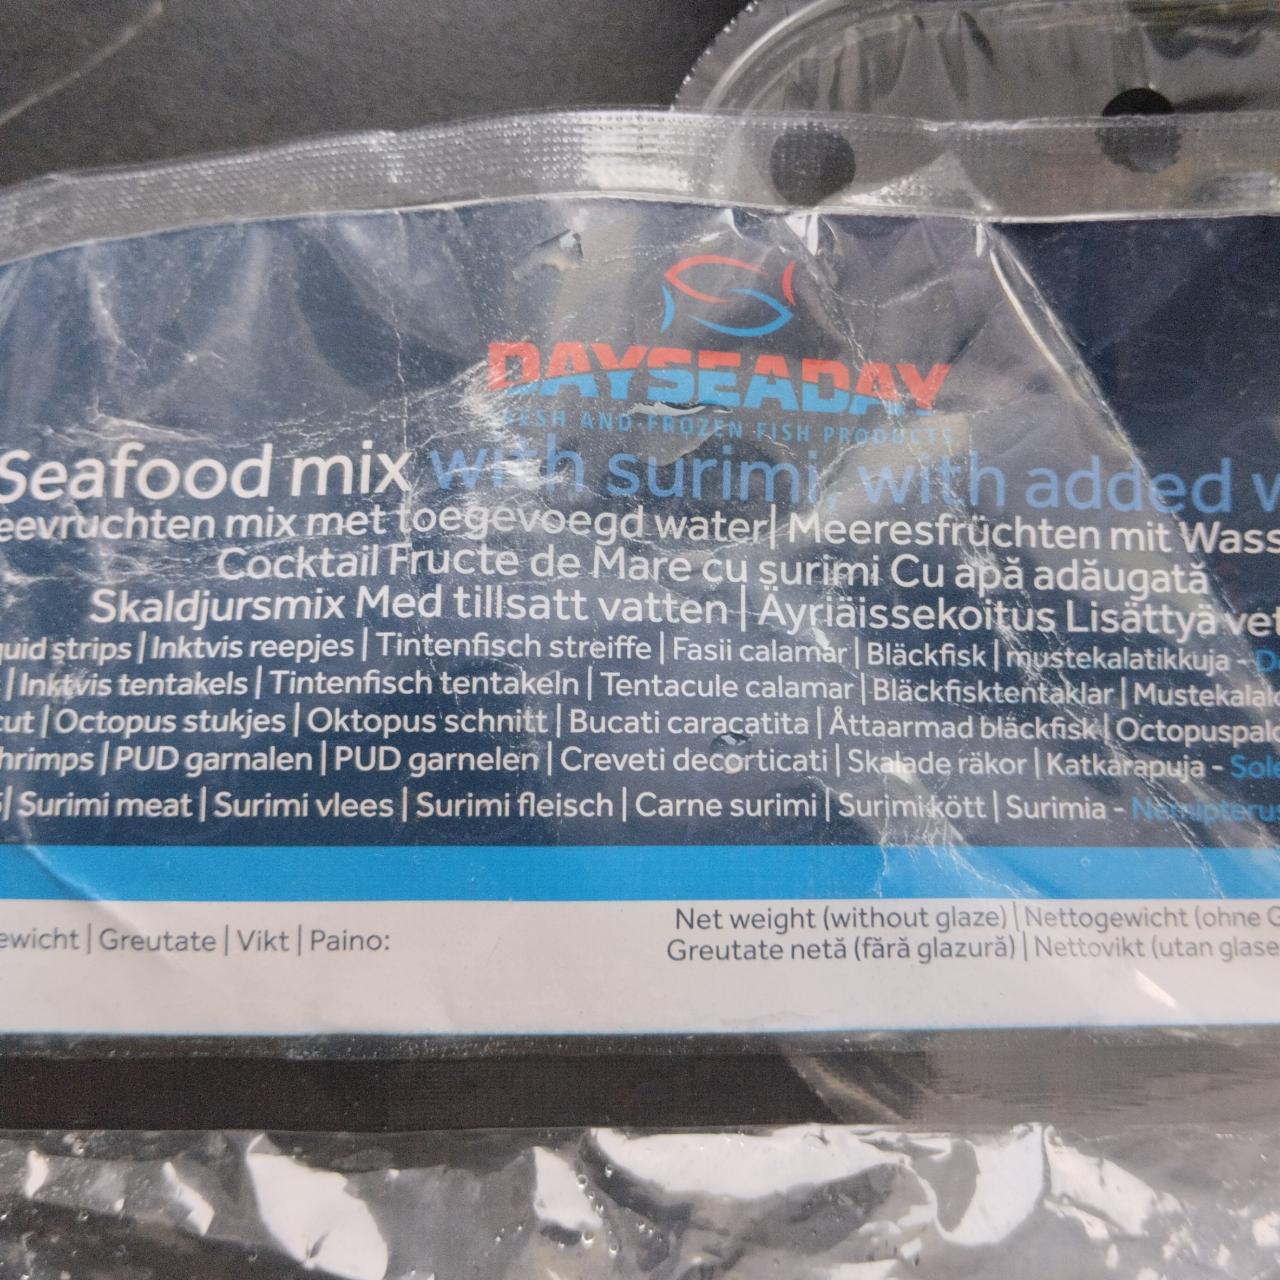 Fotografie - Seafood mix with surimi Dayseaday